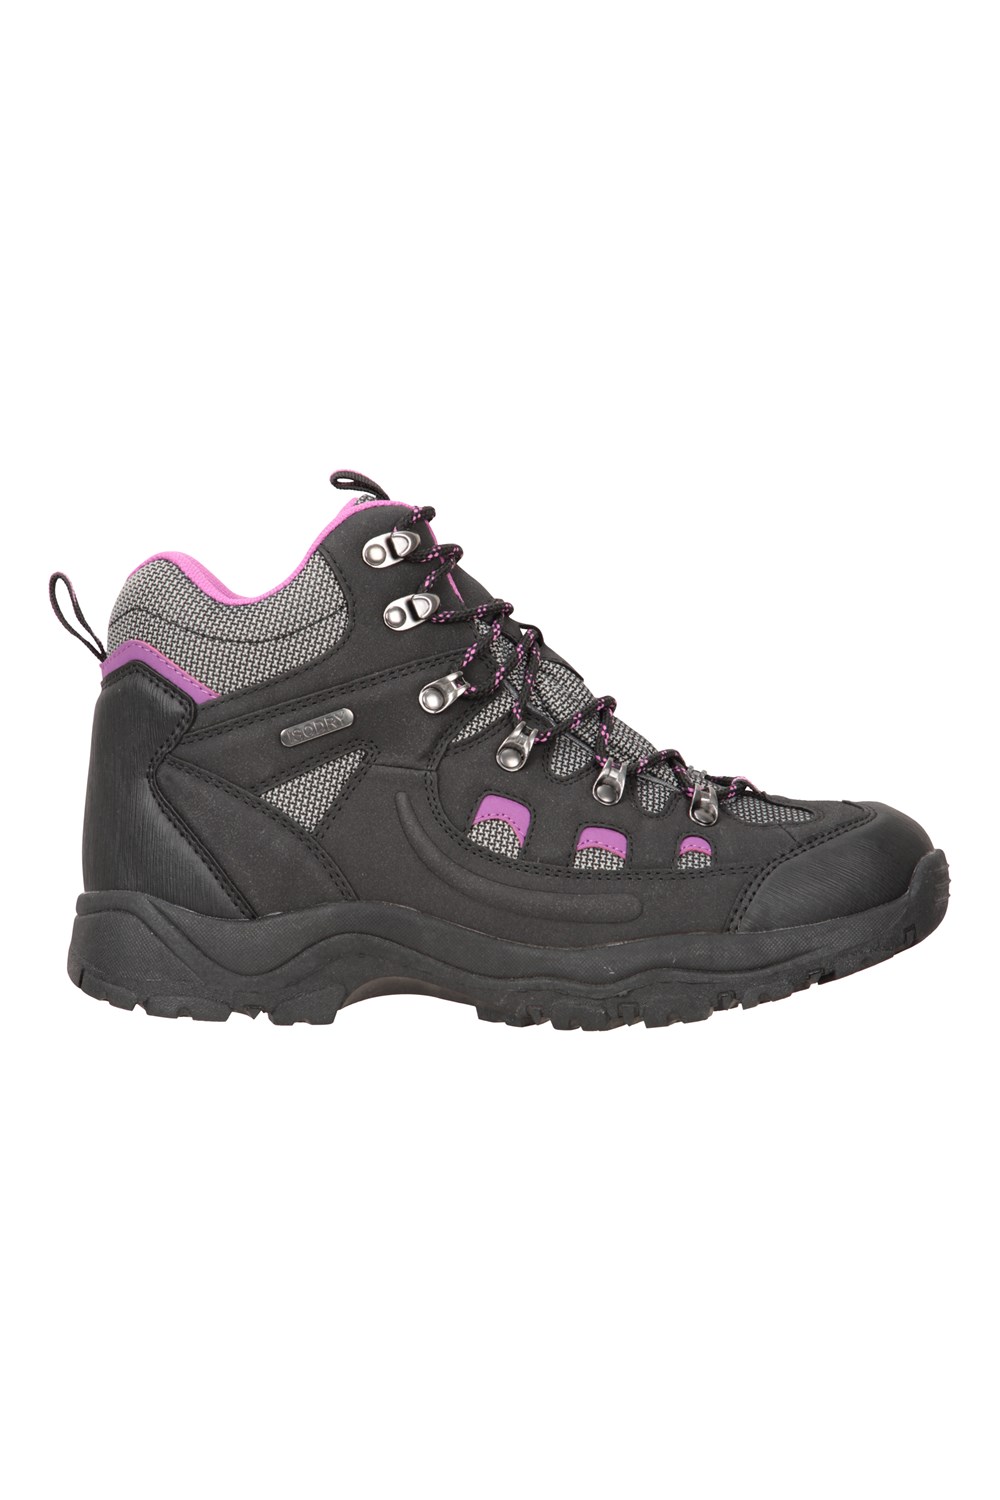 miniature 22 - Mountain Warehouse Womens Waterproof Hiking Boots Walking Trekking Ladies Boot